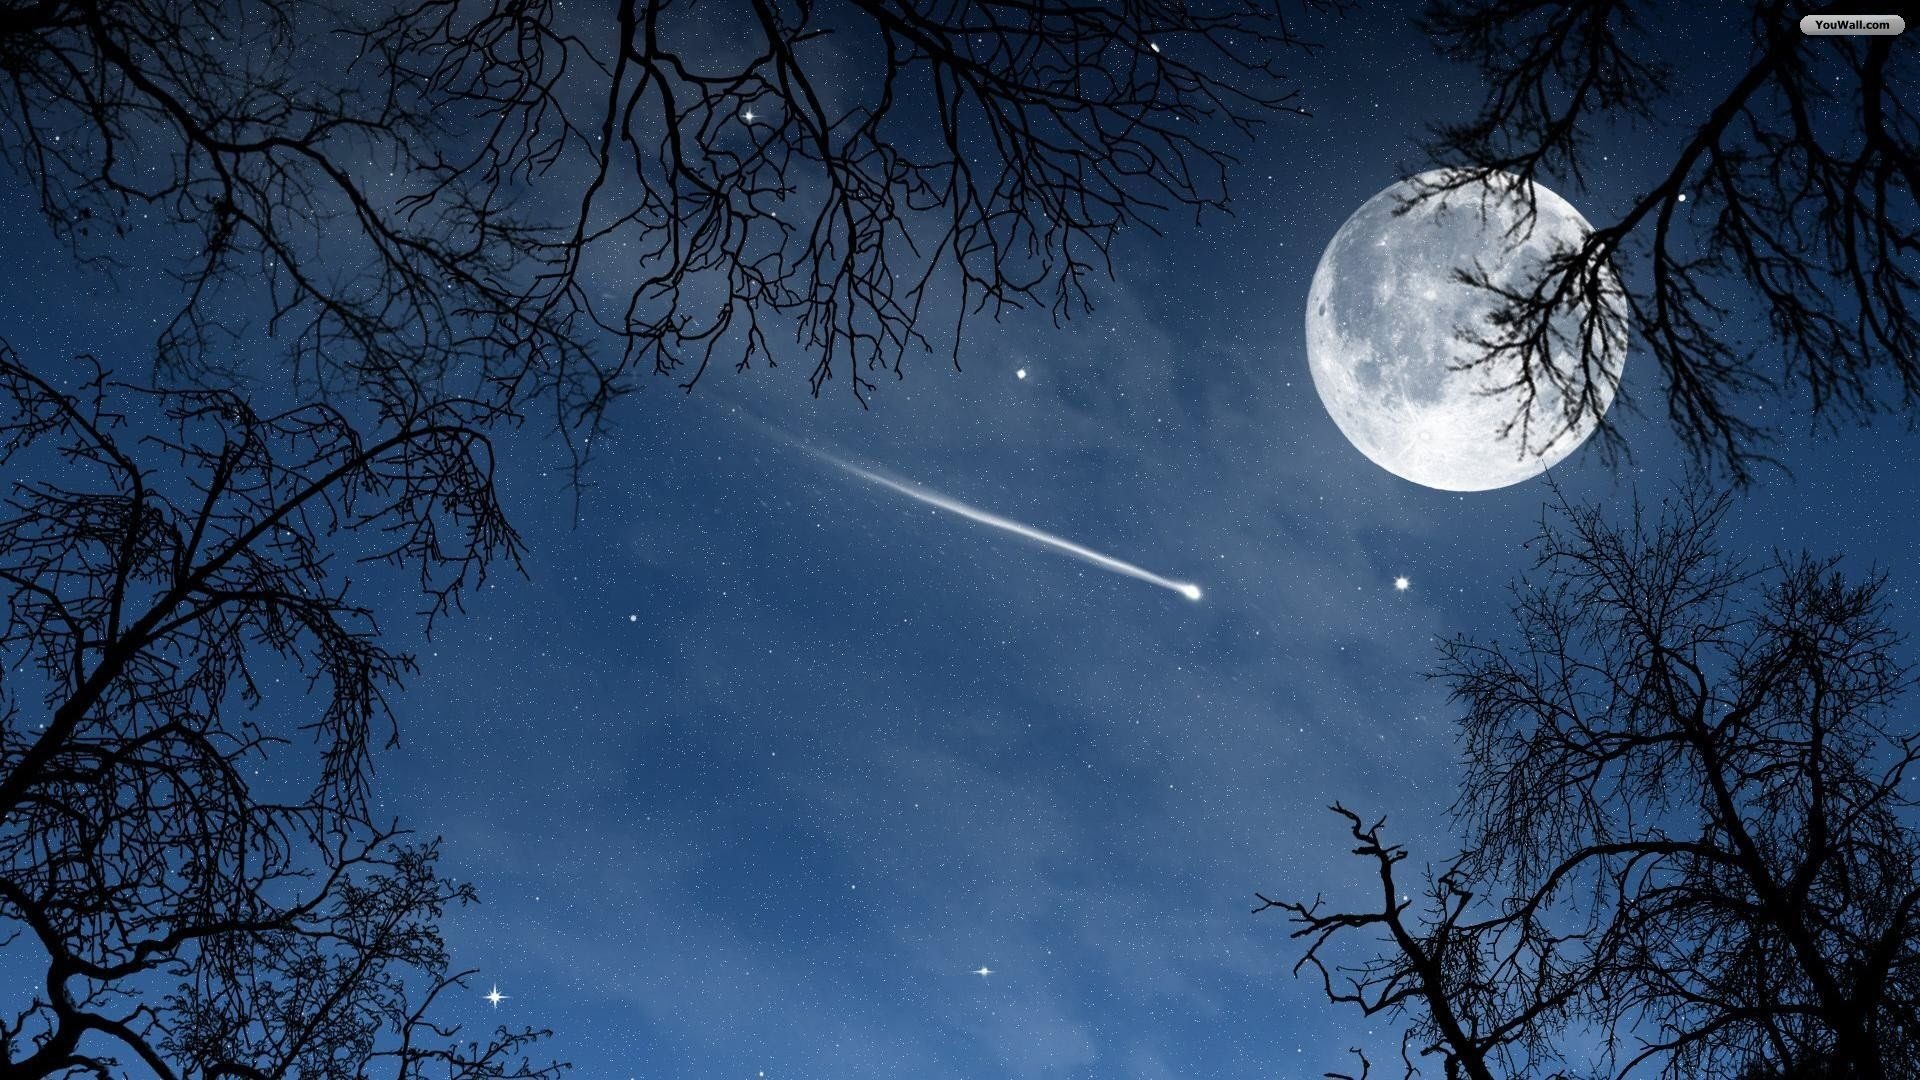 Enchanting night sky, Moonlit beauty, Celestial wonder, Star-filled heavens, 1920x1080 Full HD Desktop